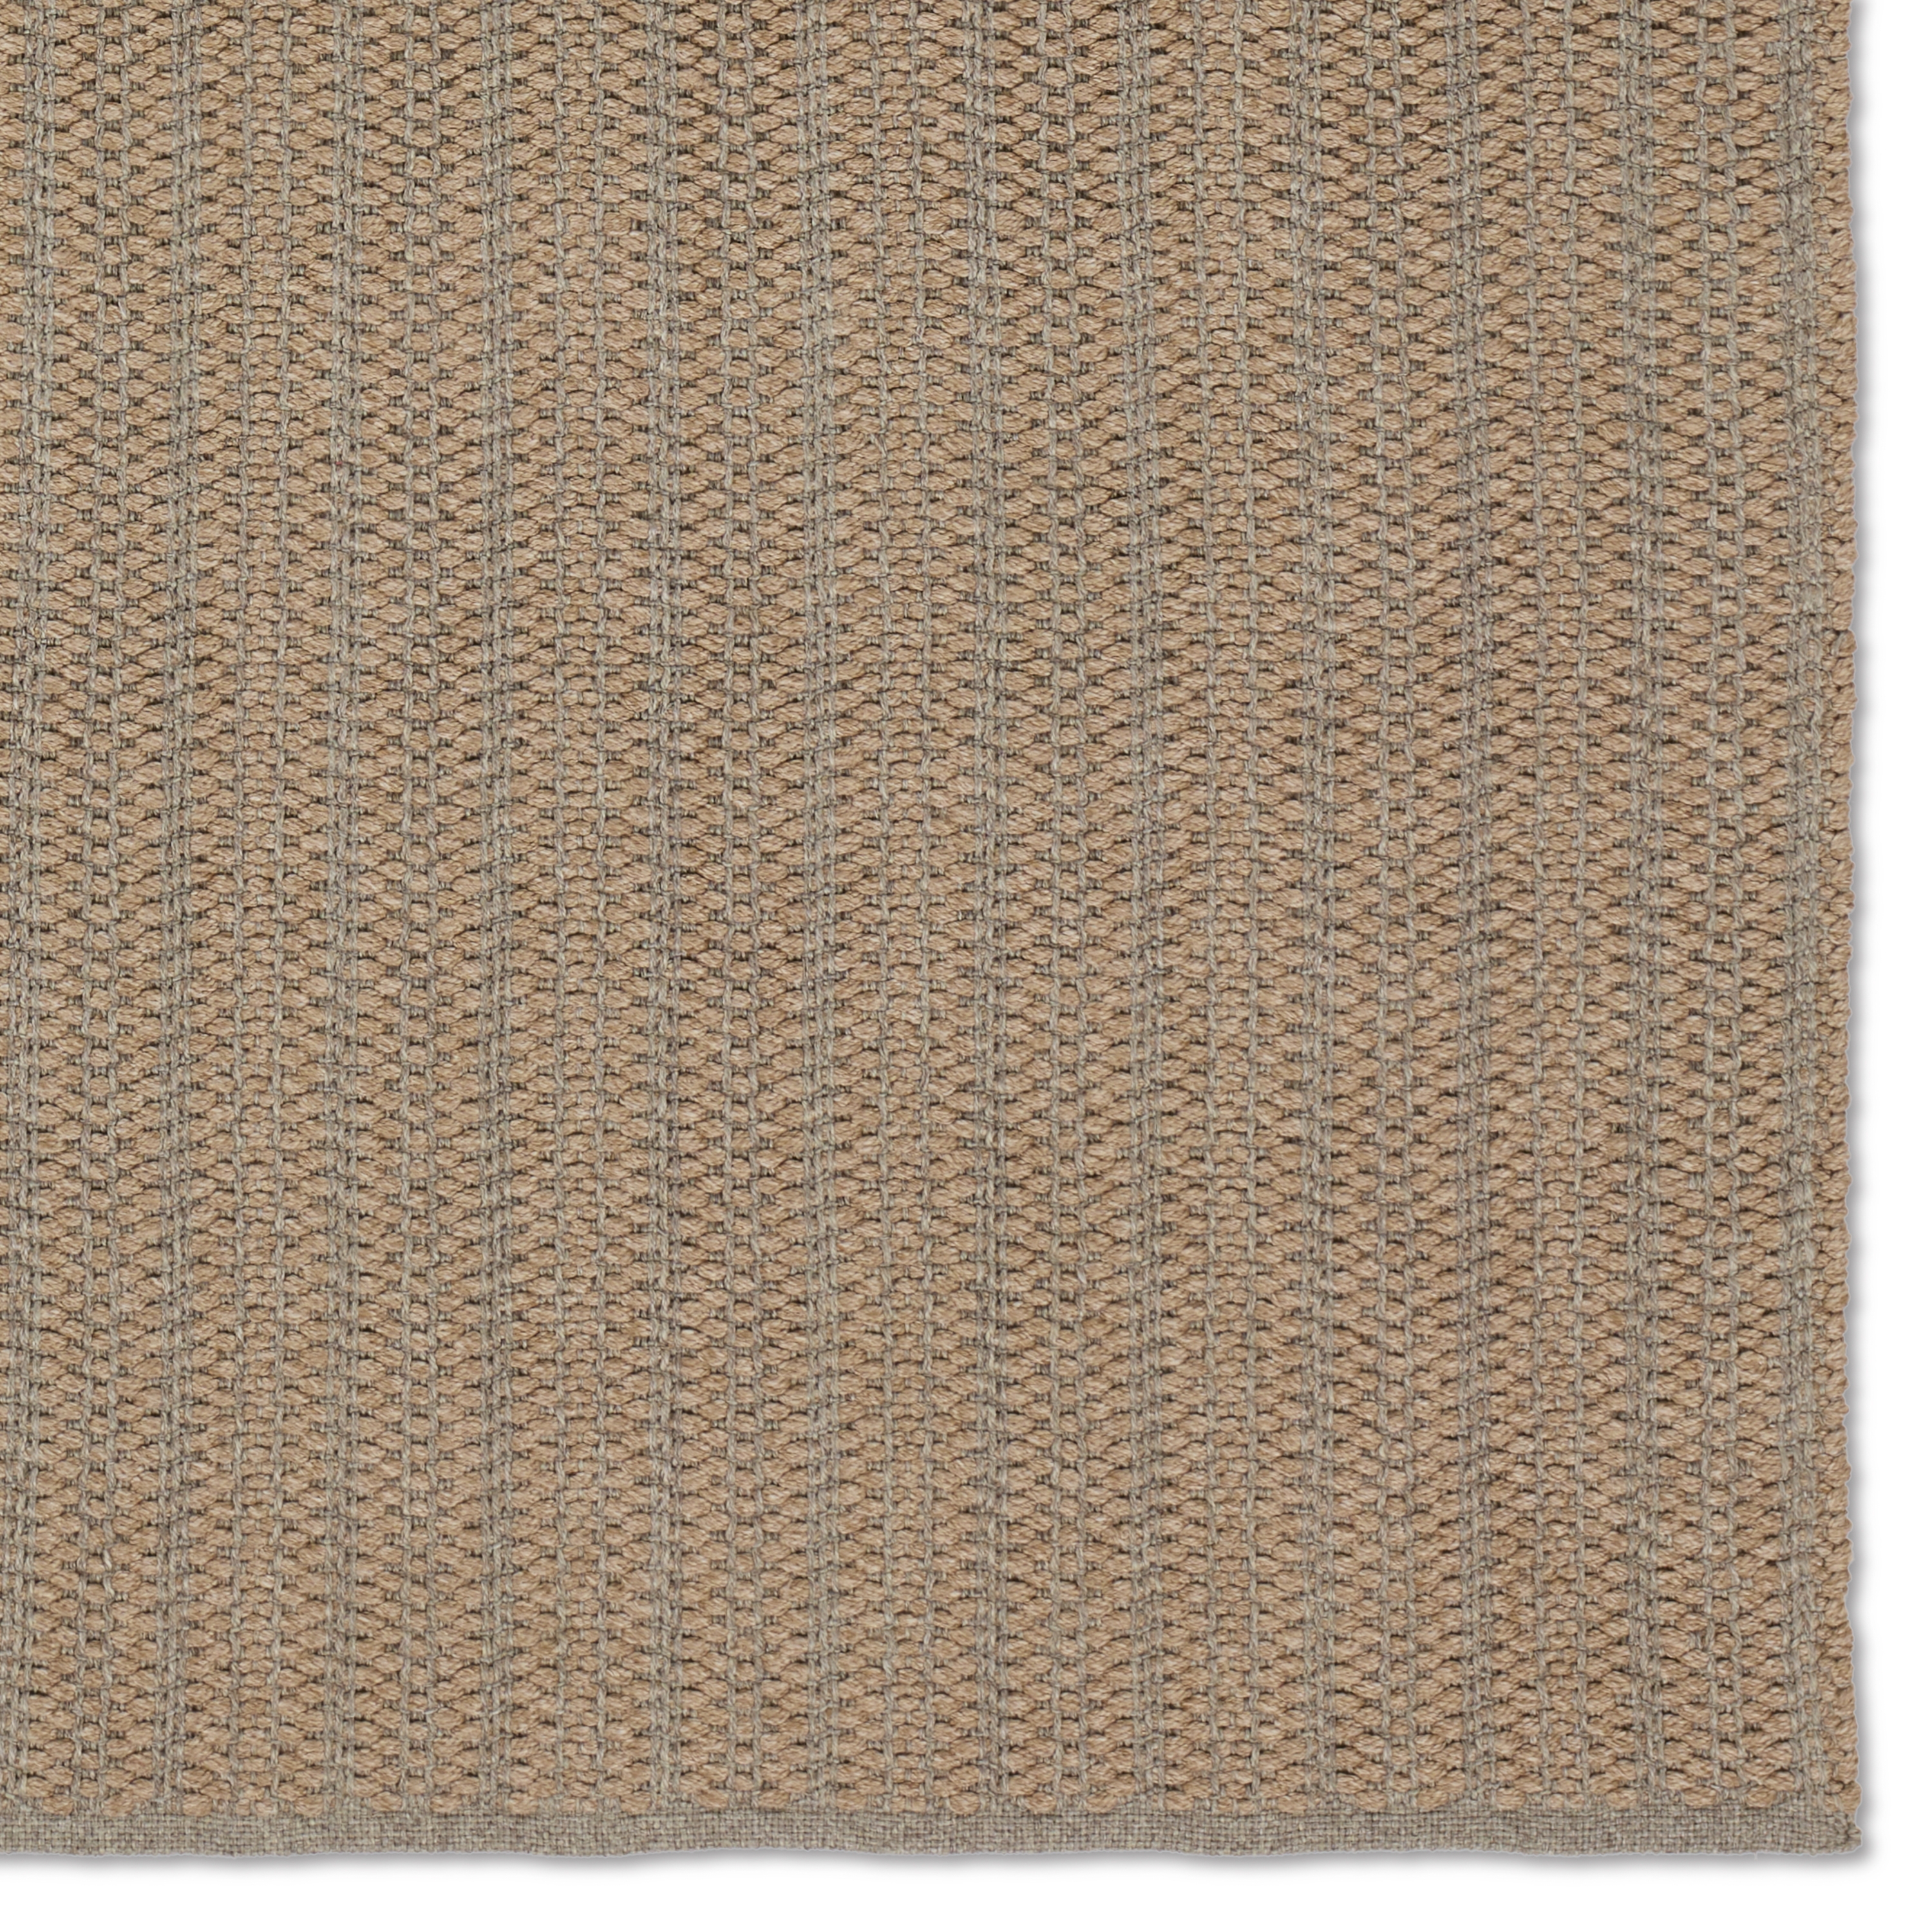 Elmas Handmade Indoor/Outdoor Striped Tan/Gray Area Rug (4'X6') - Image 3